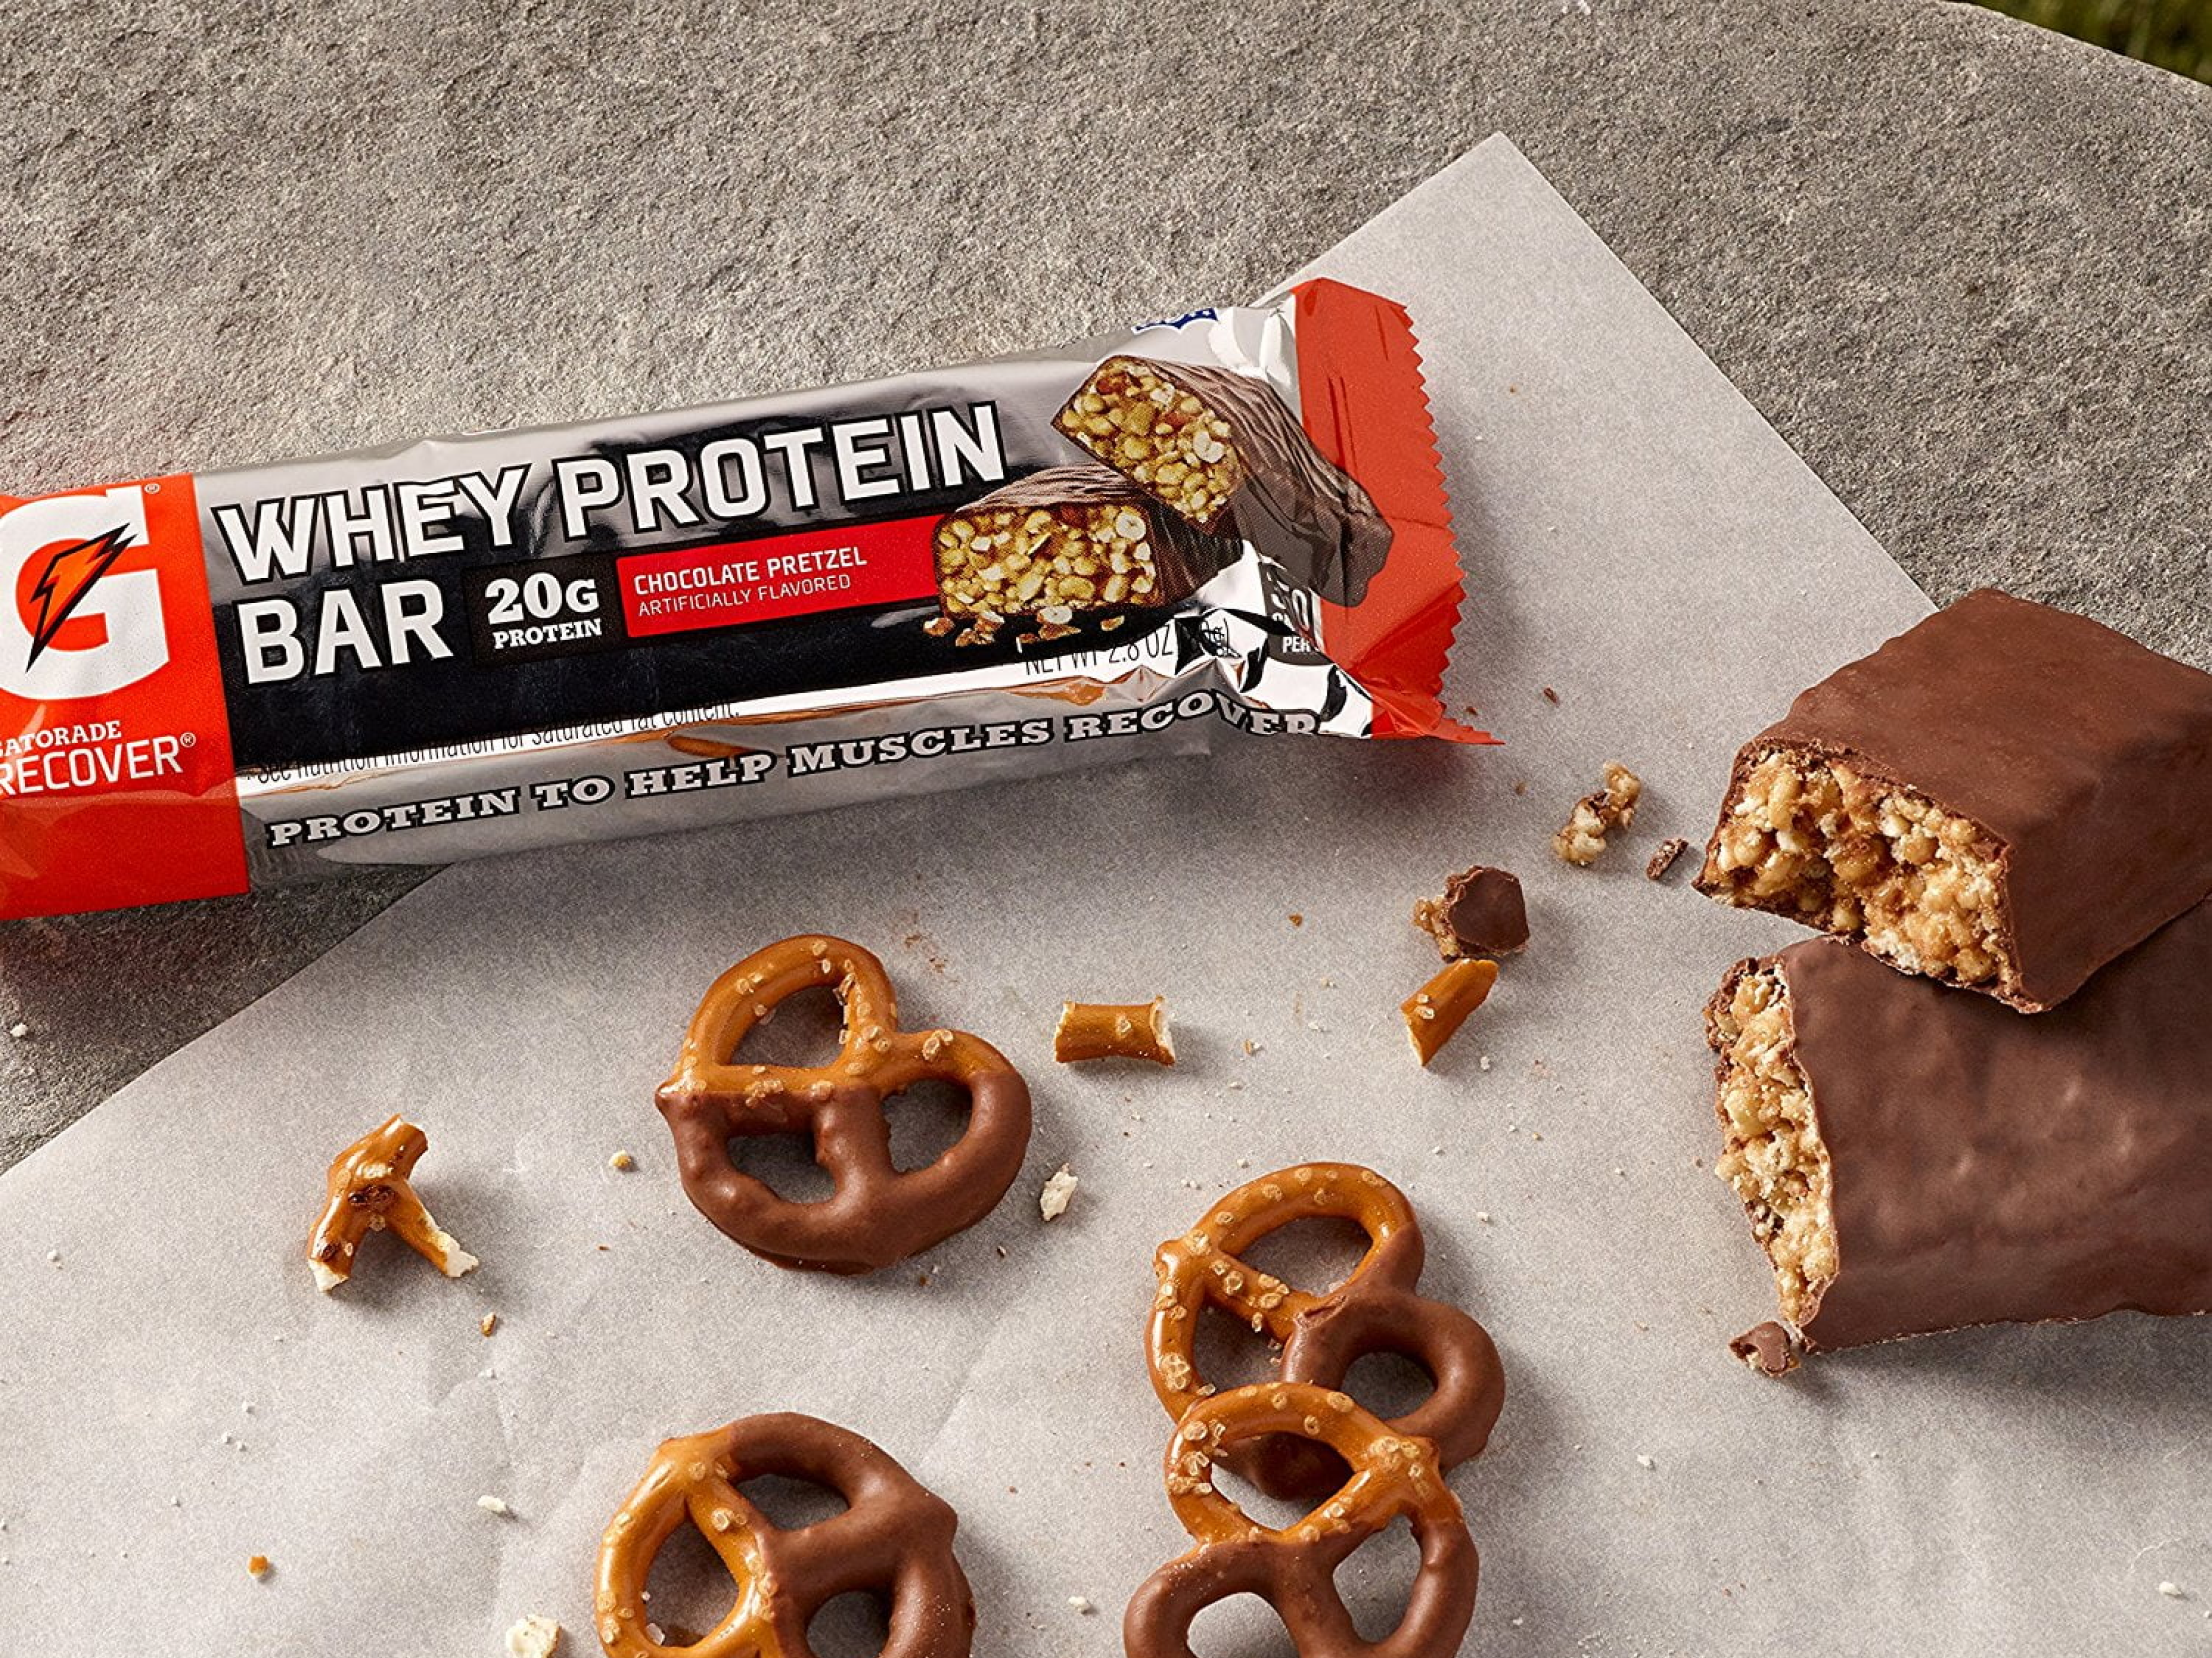 Protein bar with pretzels